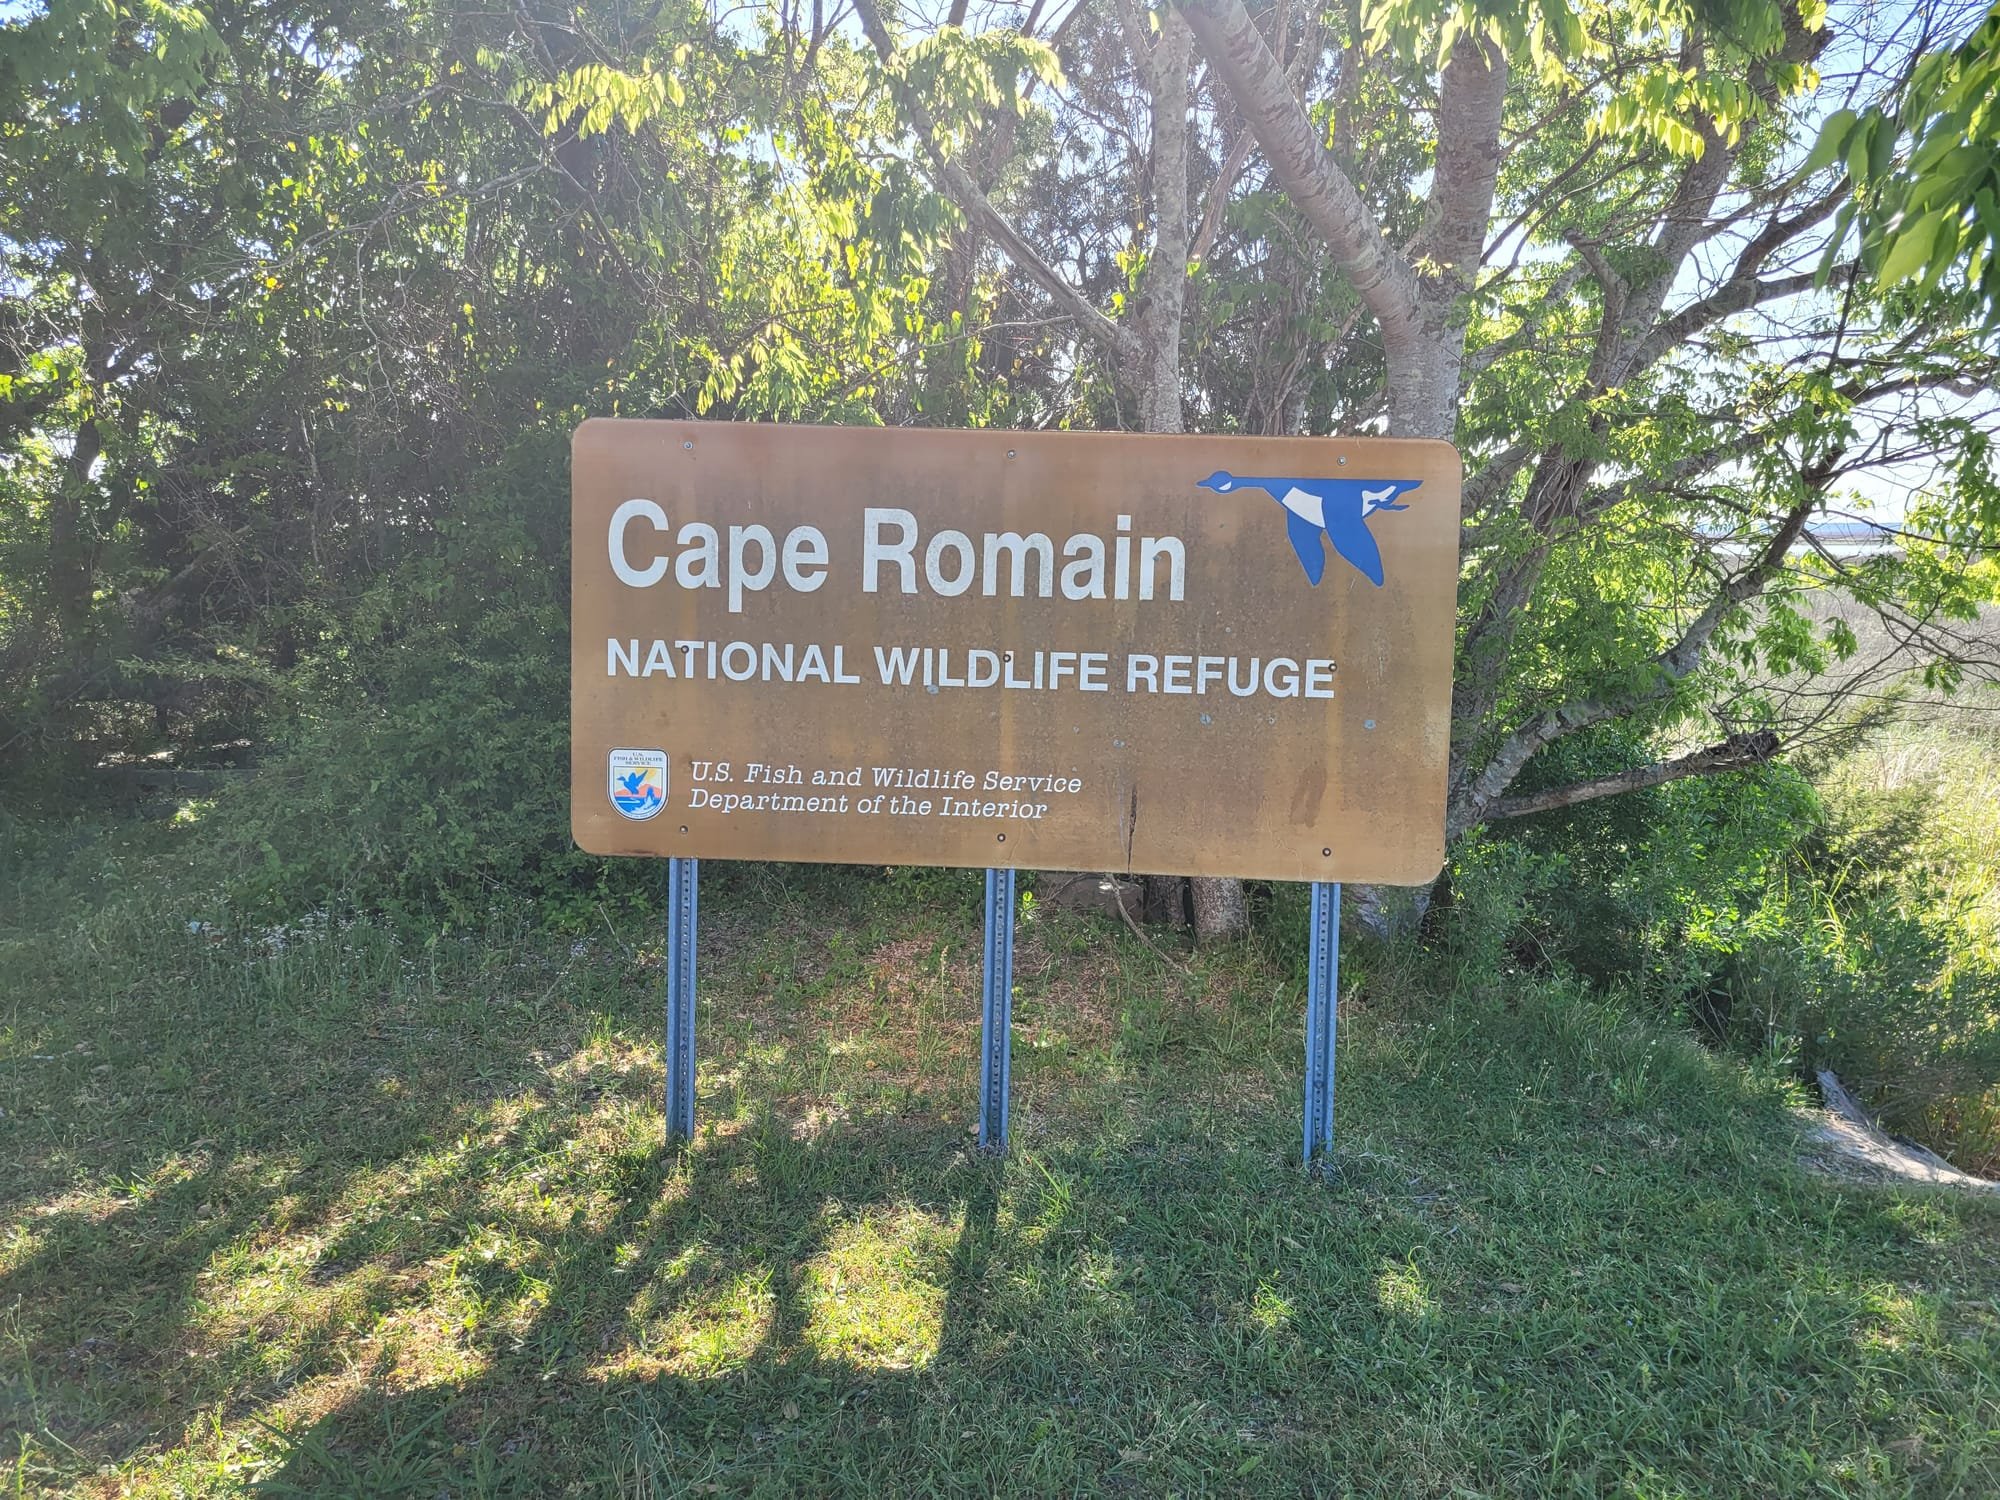 REI Trip: Cape Romain - Kayak Launching Point for Bulls Island